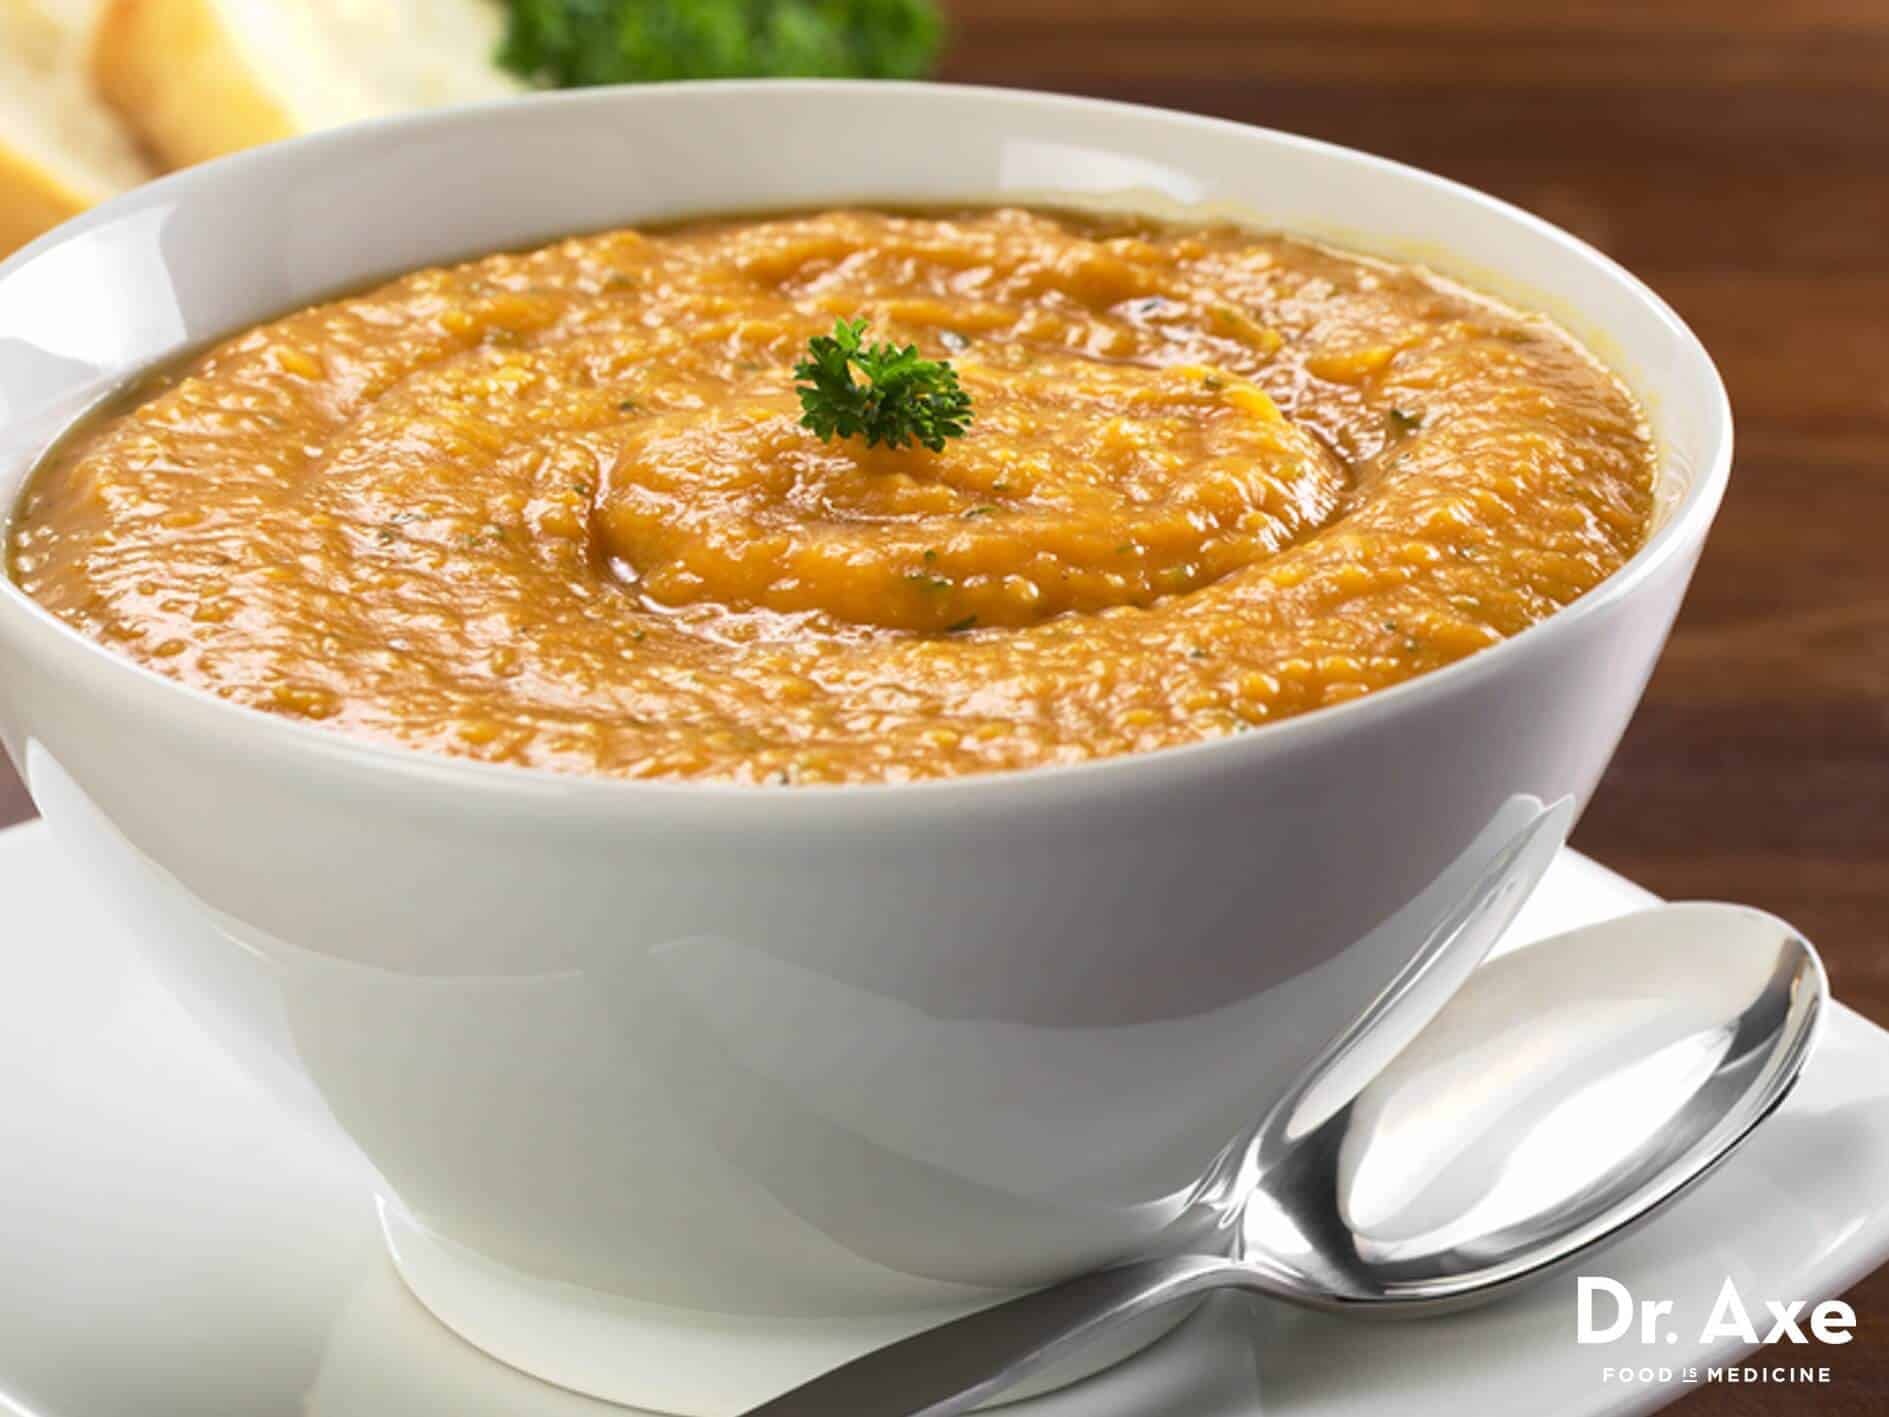 Roasted garlic and sweet potato soup recipe - Dr. Axe